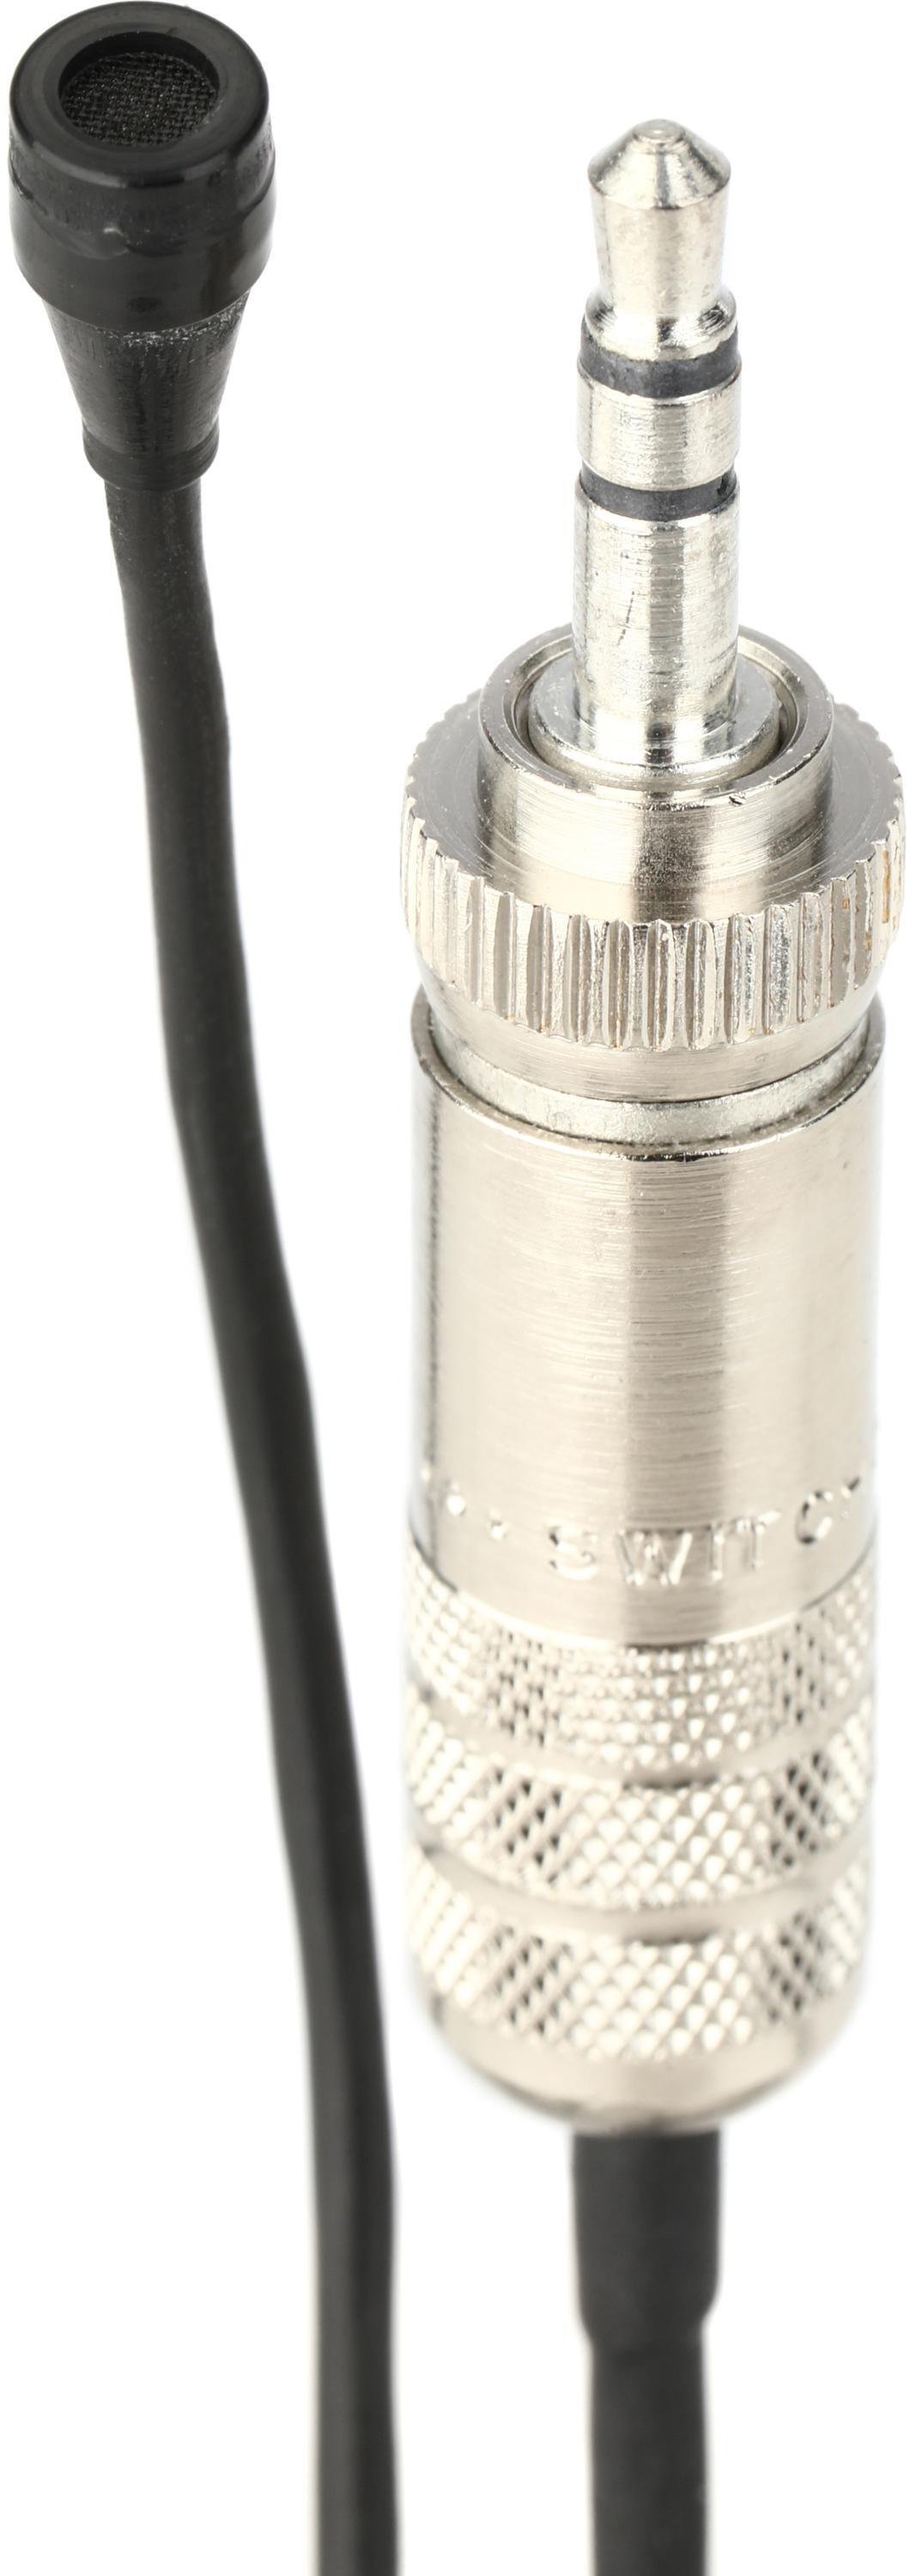 Countryman B3 Omnidirectional Lavalier Microphone - Standard ...